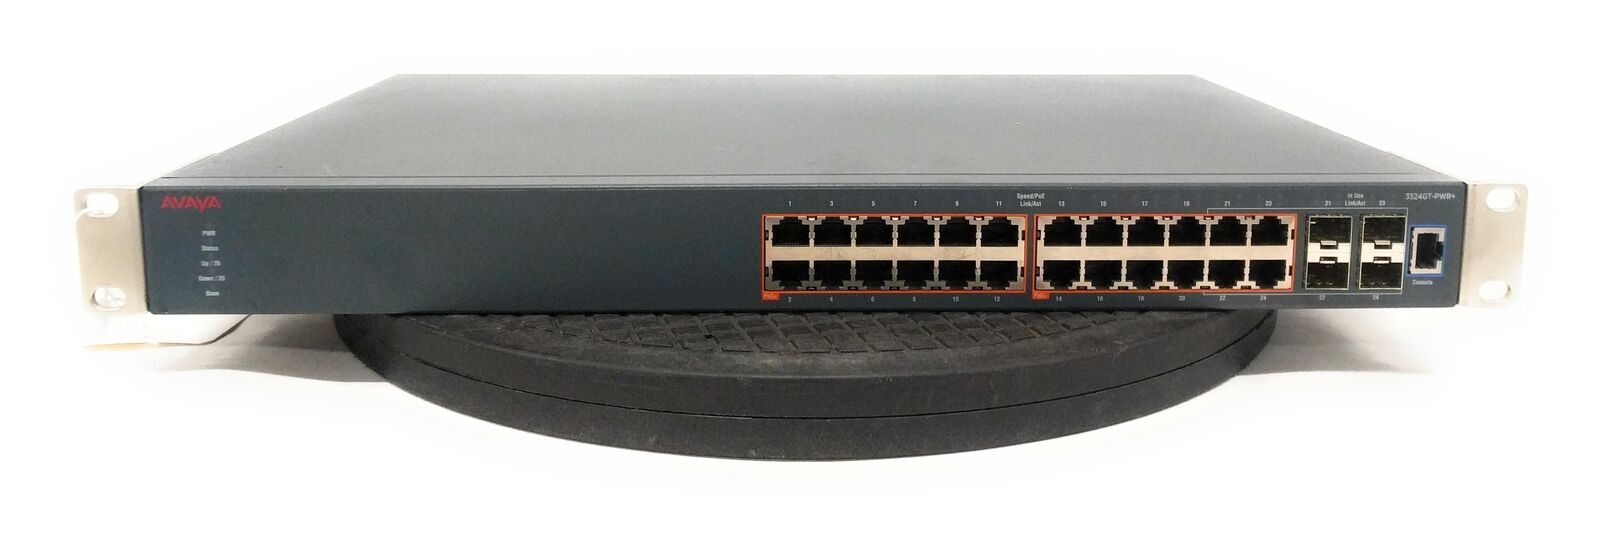 Avaya 3524GT-PWR+ 24-Port PoE Ethernet Switches AL3500A15-E6 TESTED